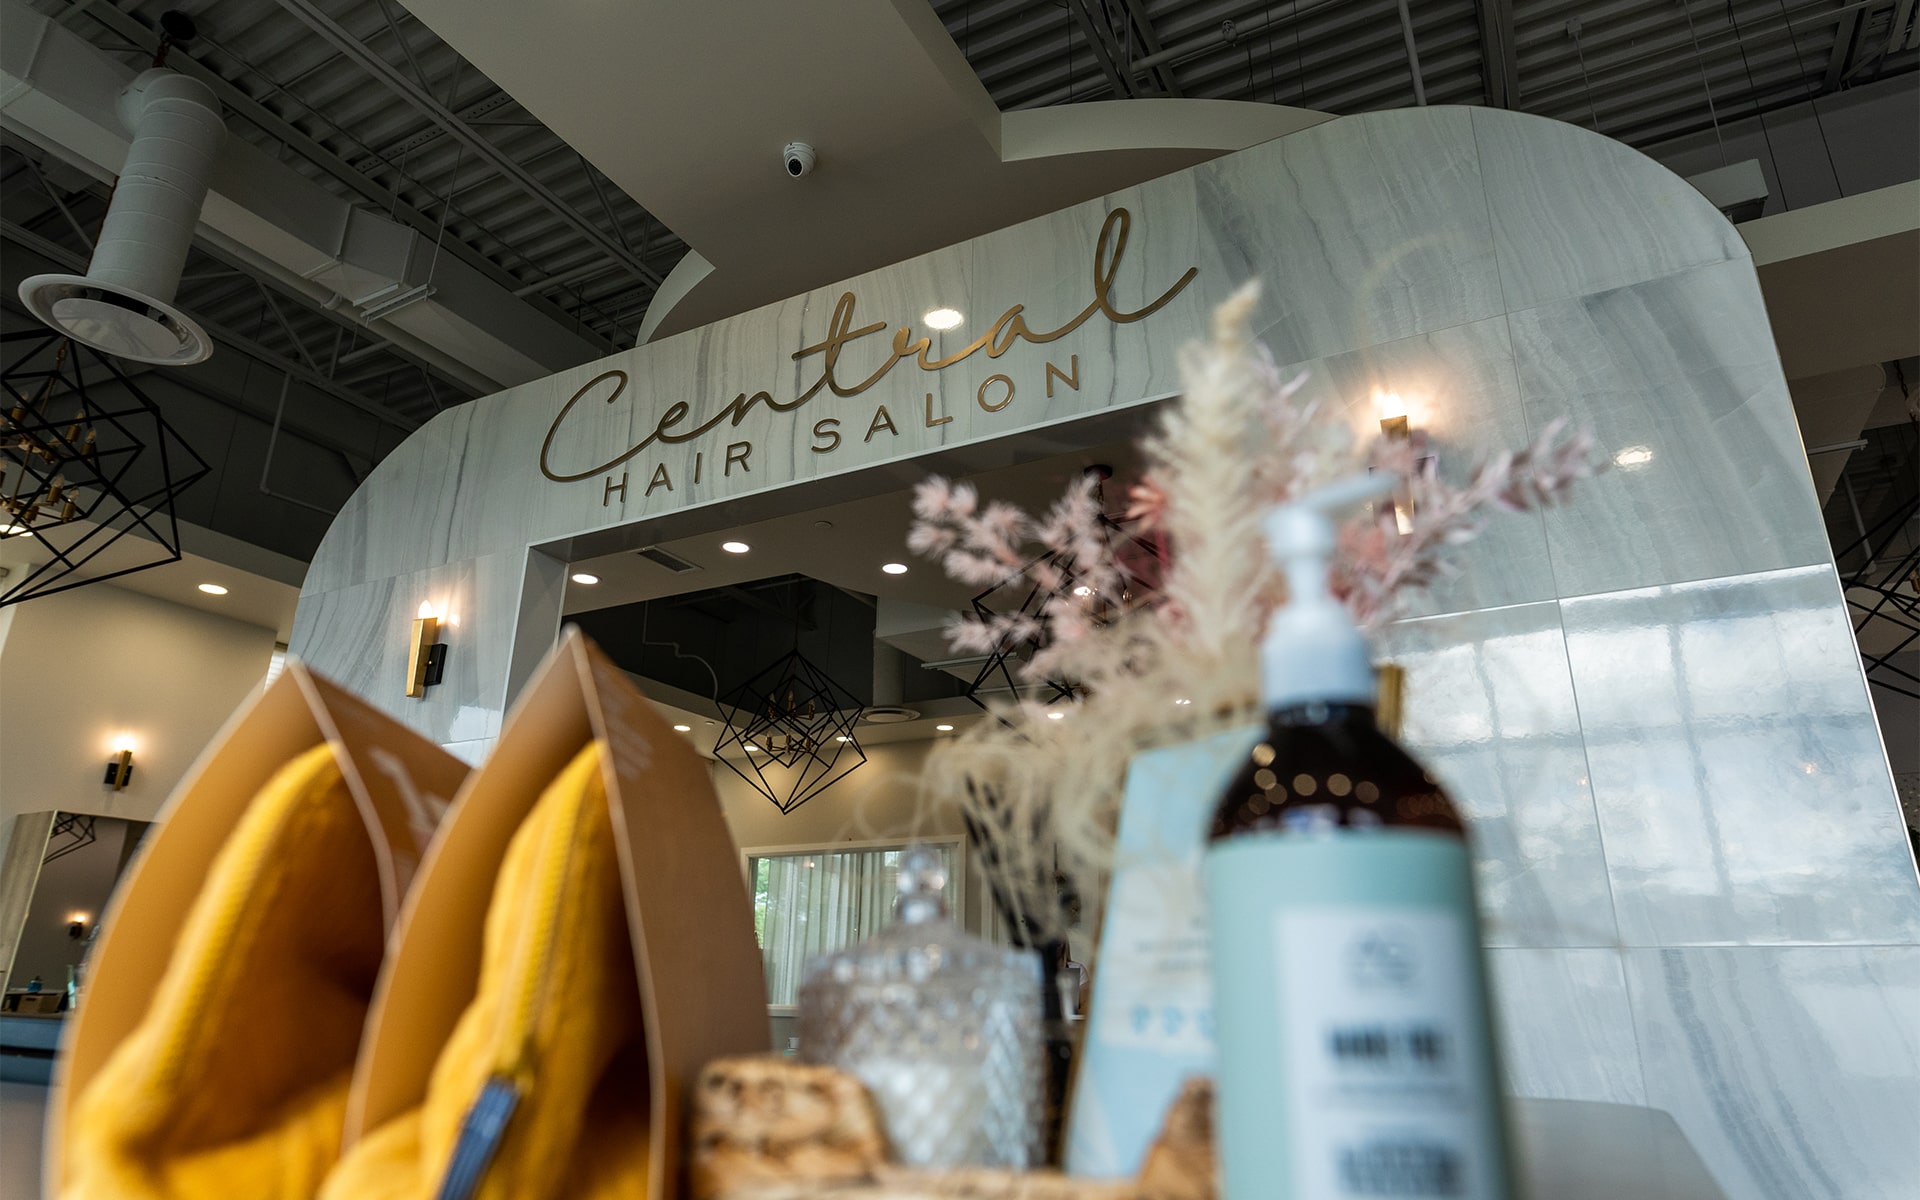 Central Hair Salon - Interior 2